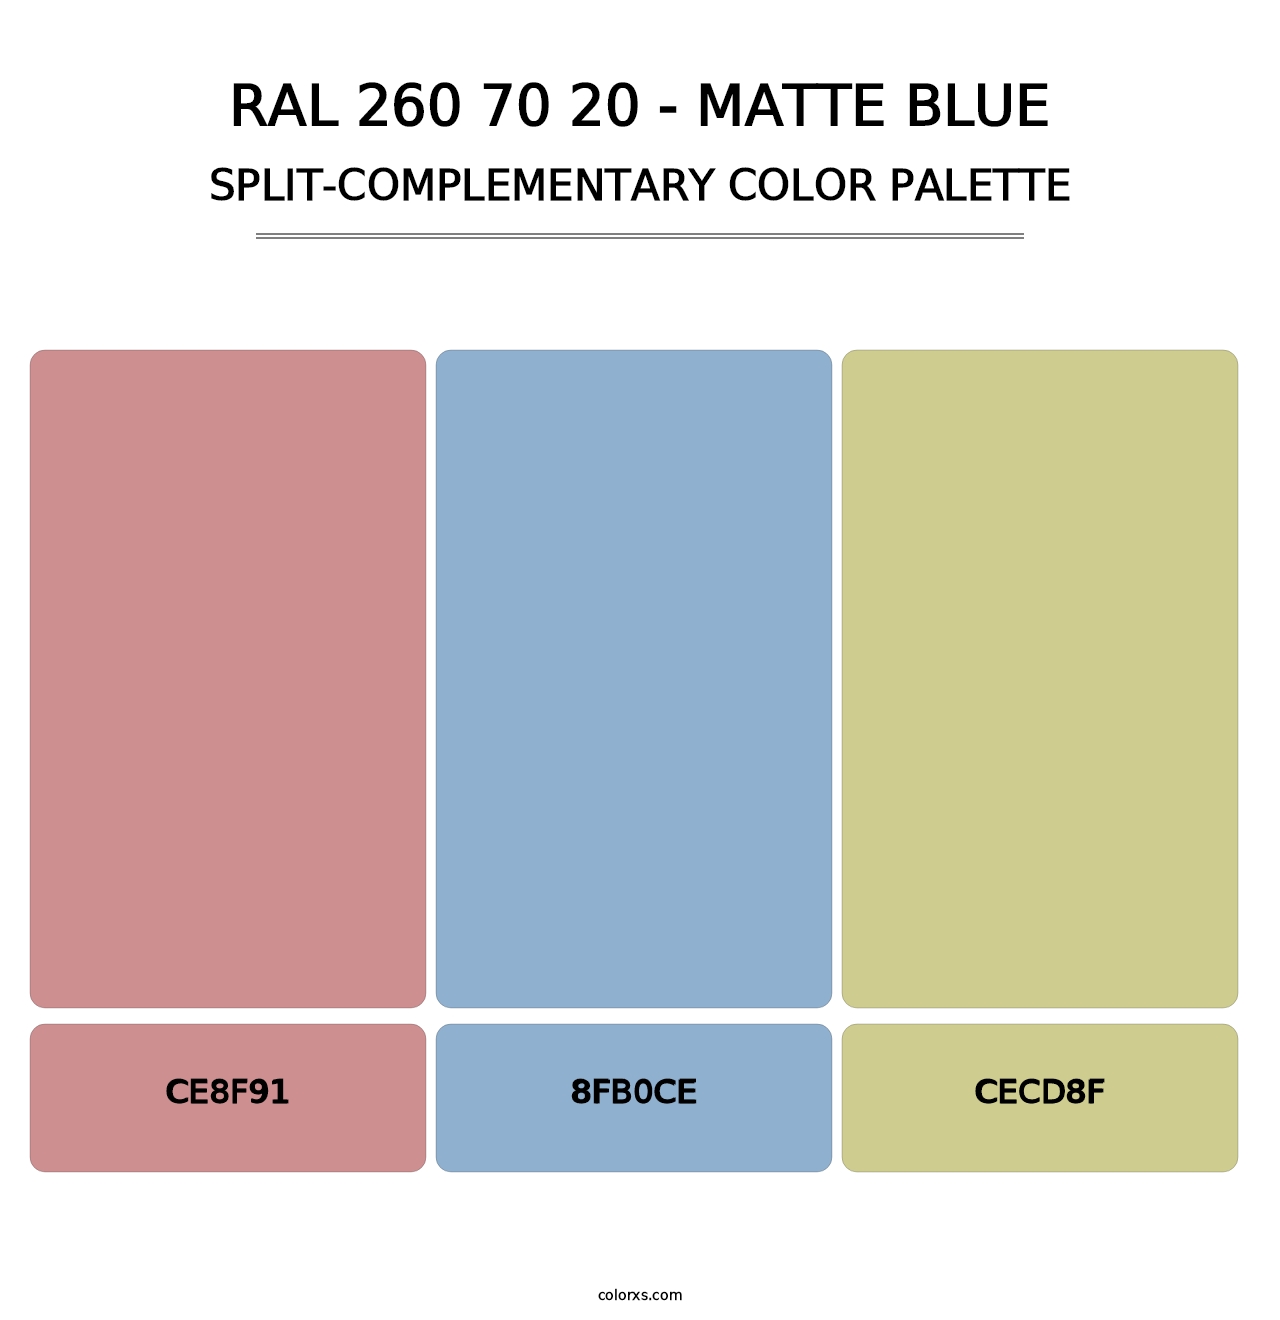 RAL 260 70 20 - Matte Blue - Split-Complementary Color Palette